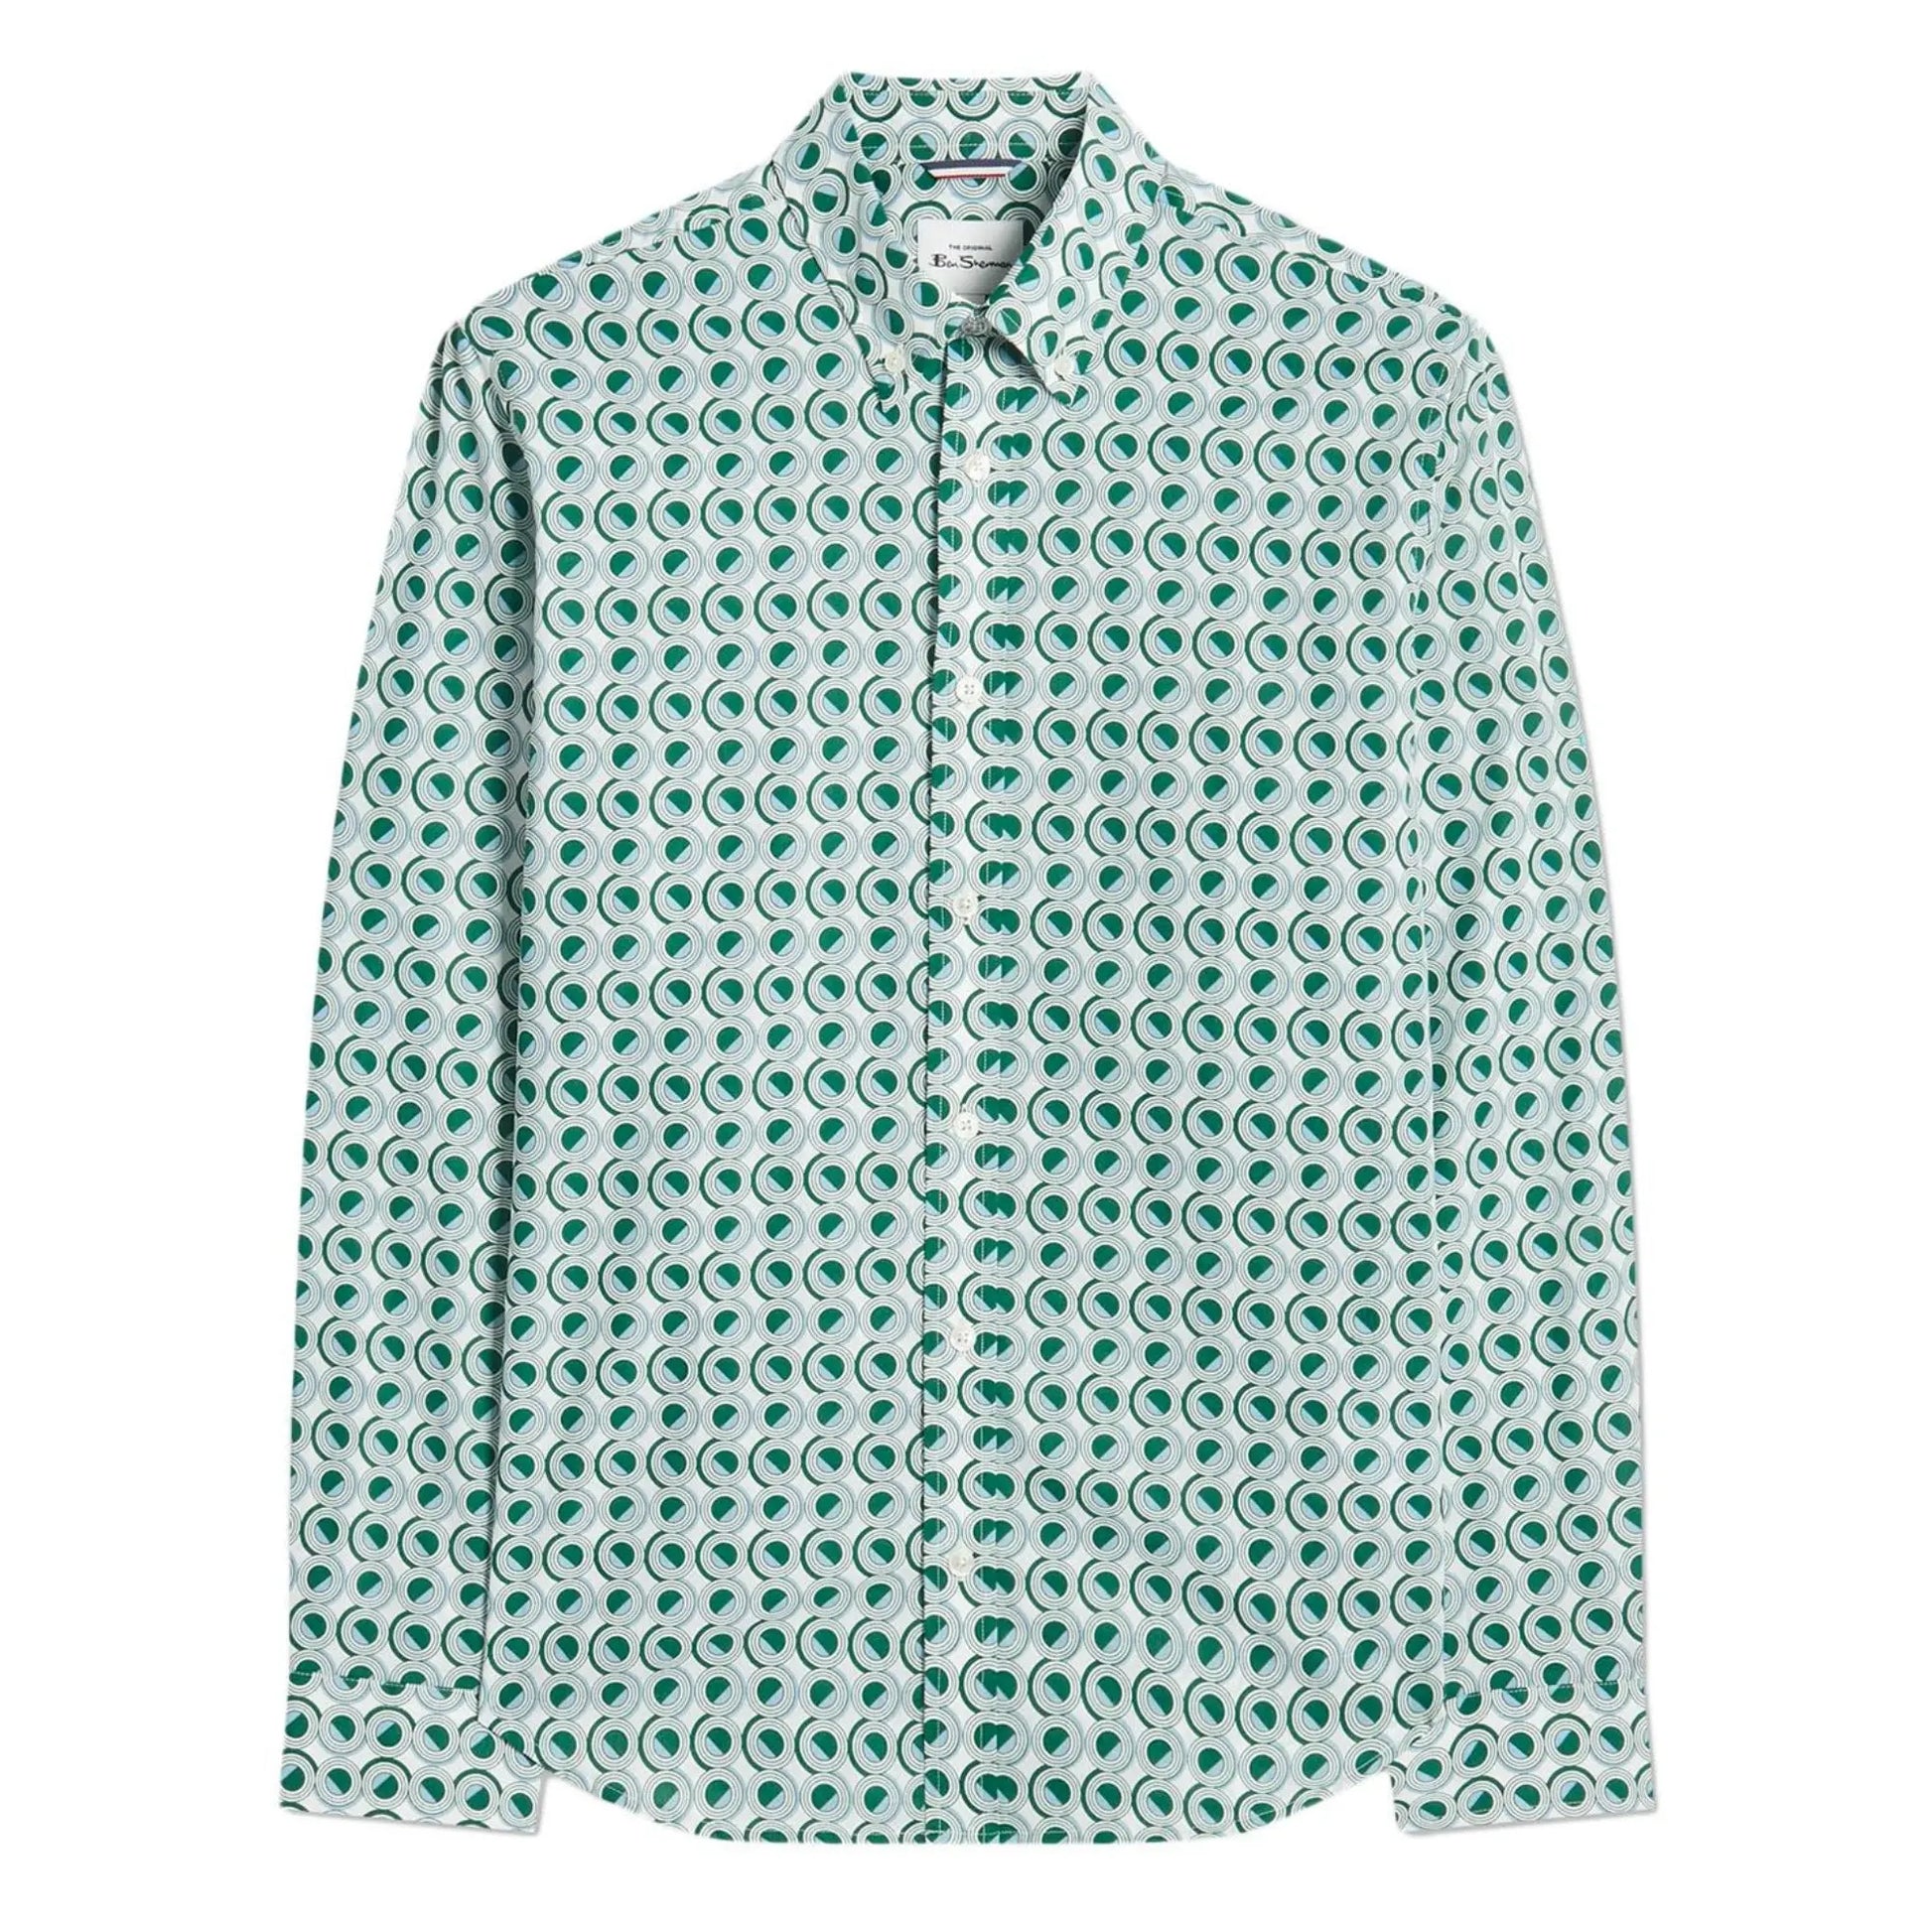 Buy Ben Sherman Retro Geo Print Shirt - Green | Long-Sleeved Shirtss at Woven Durham